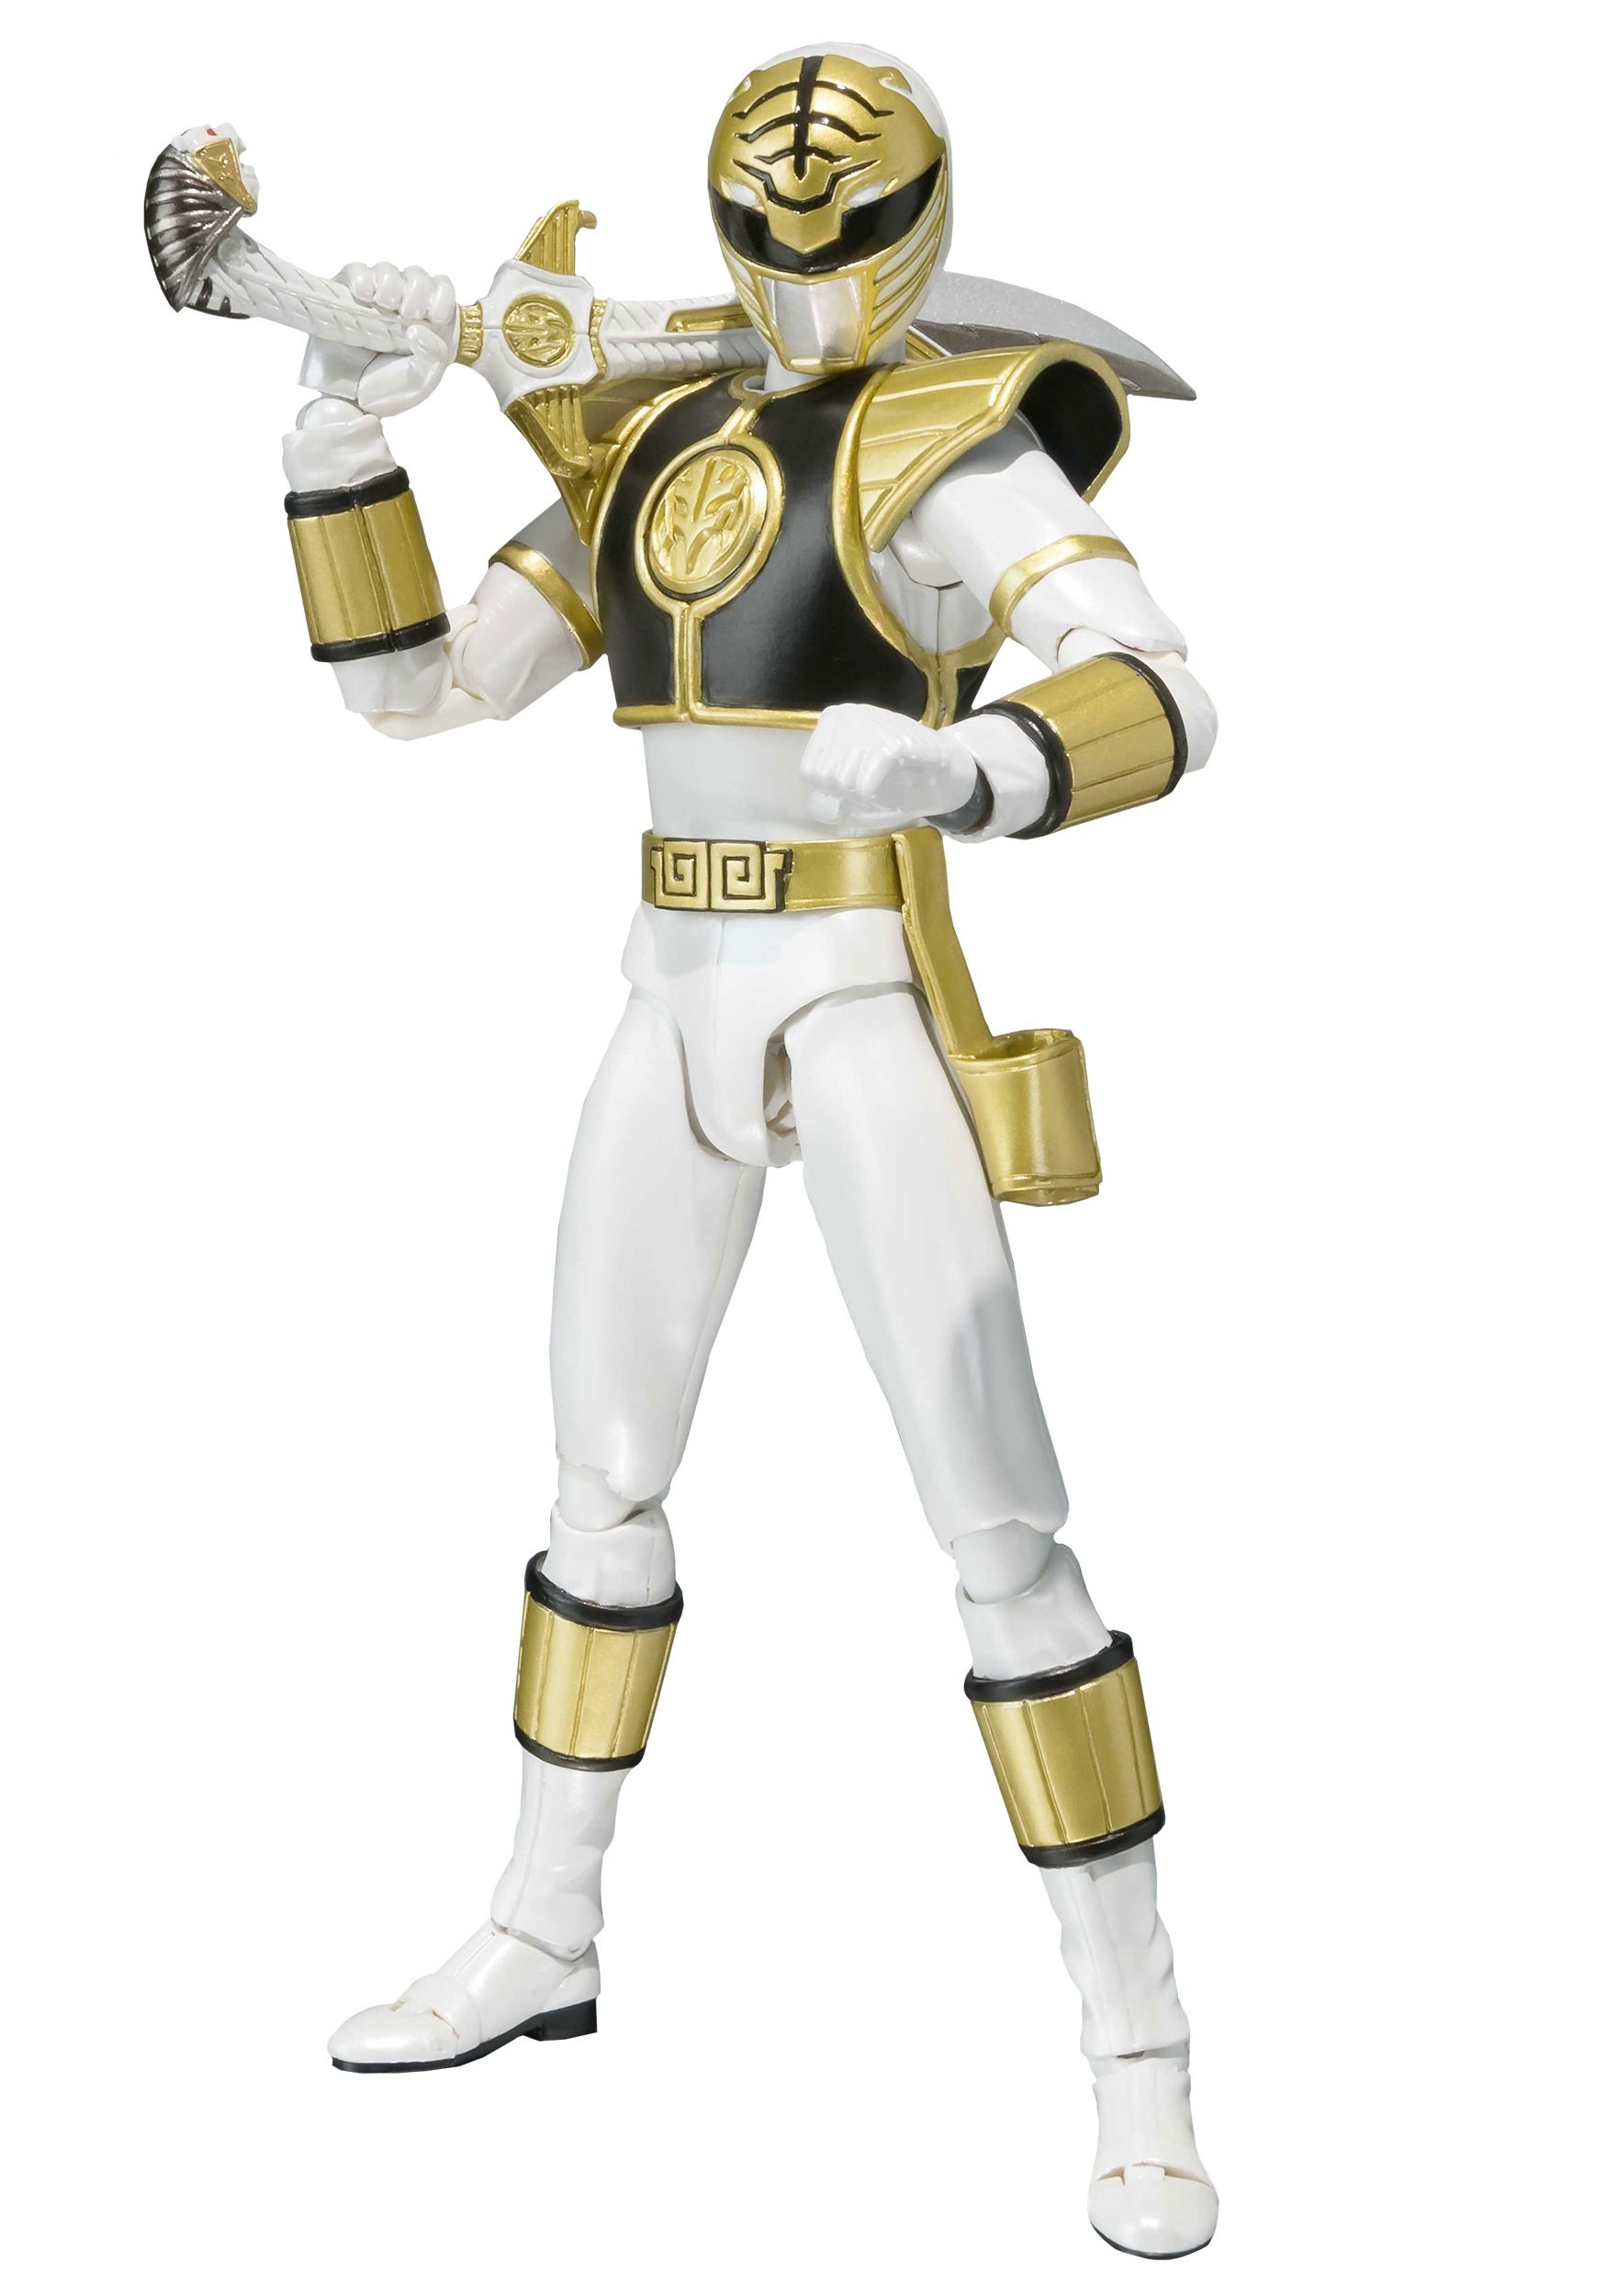 Bandai White Ranger Tamashii Nations SH Figurats Action Figure